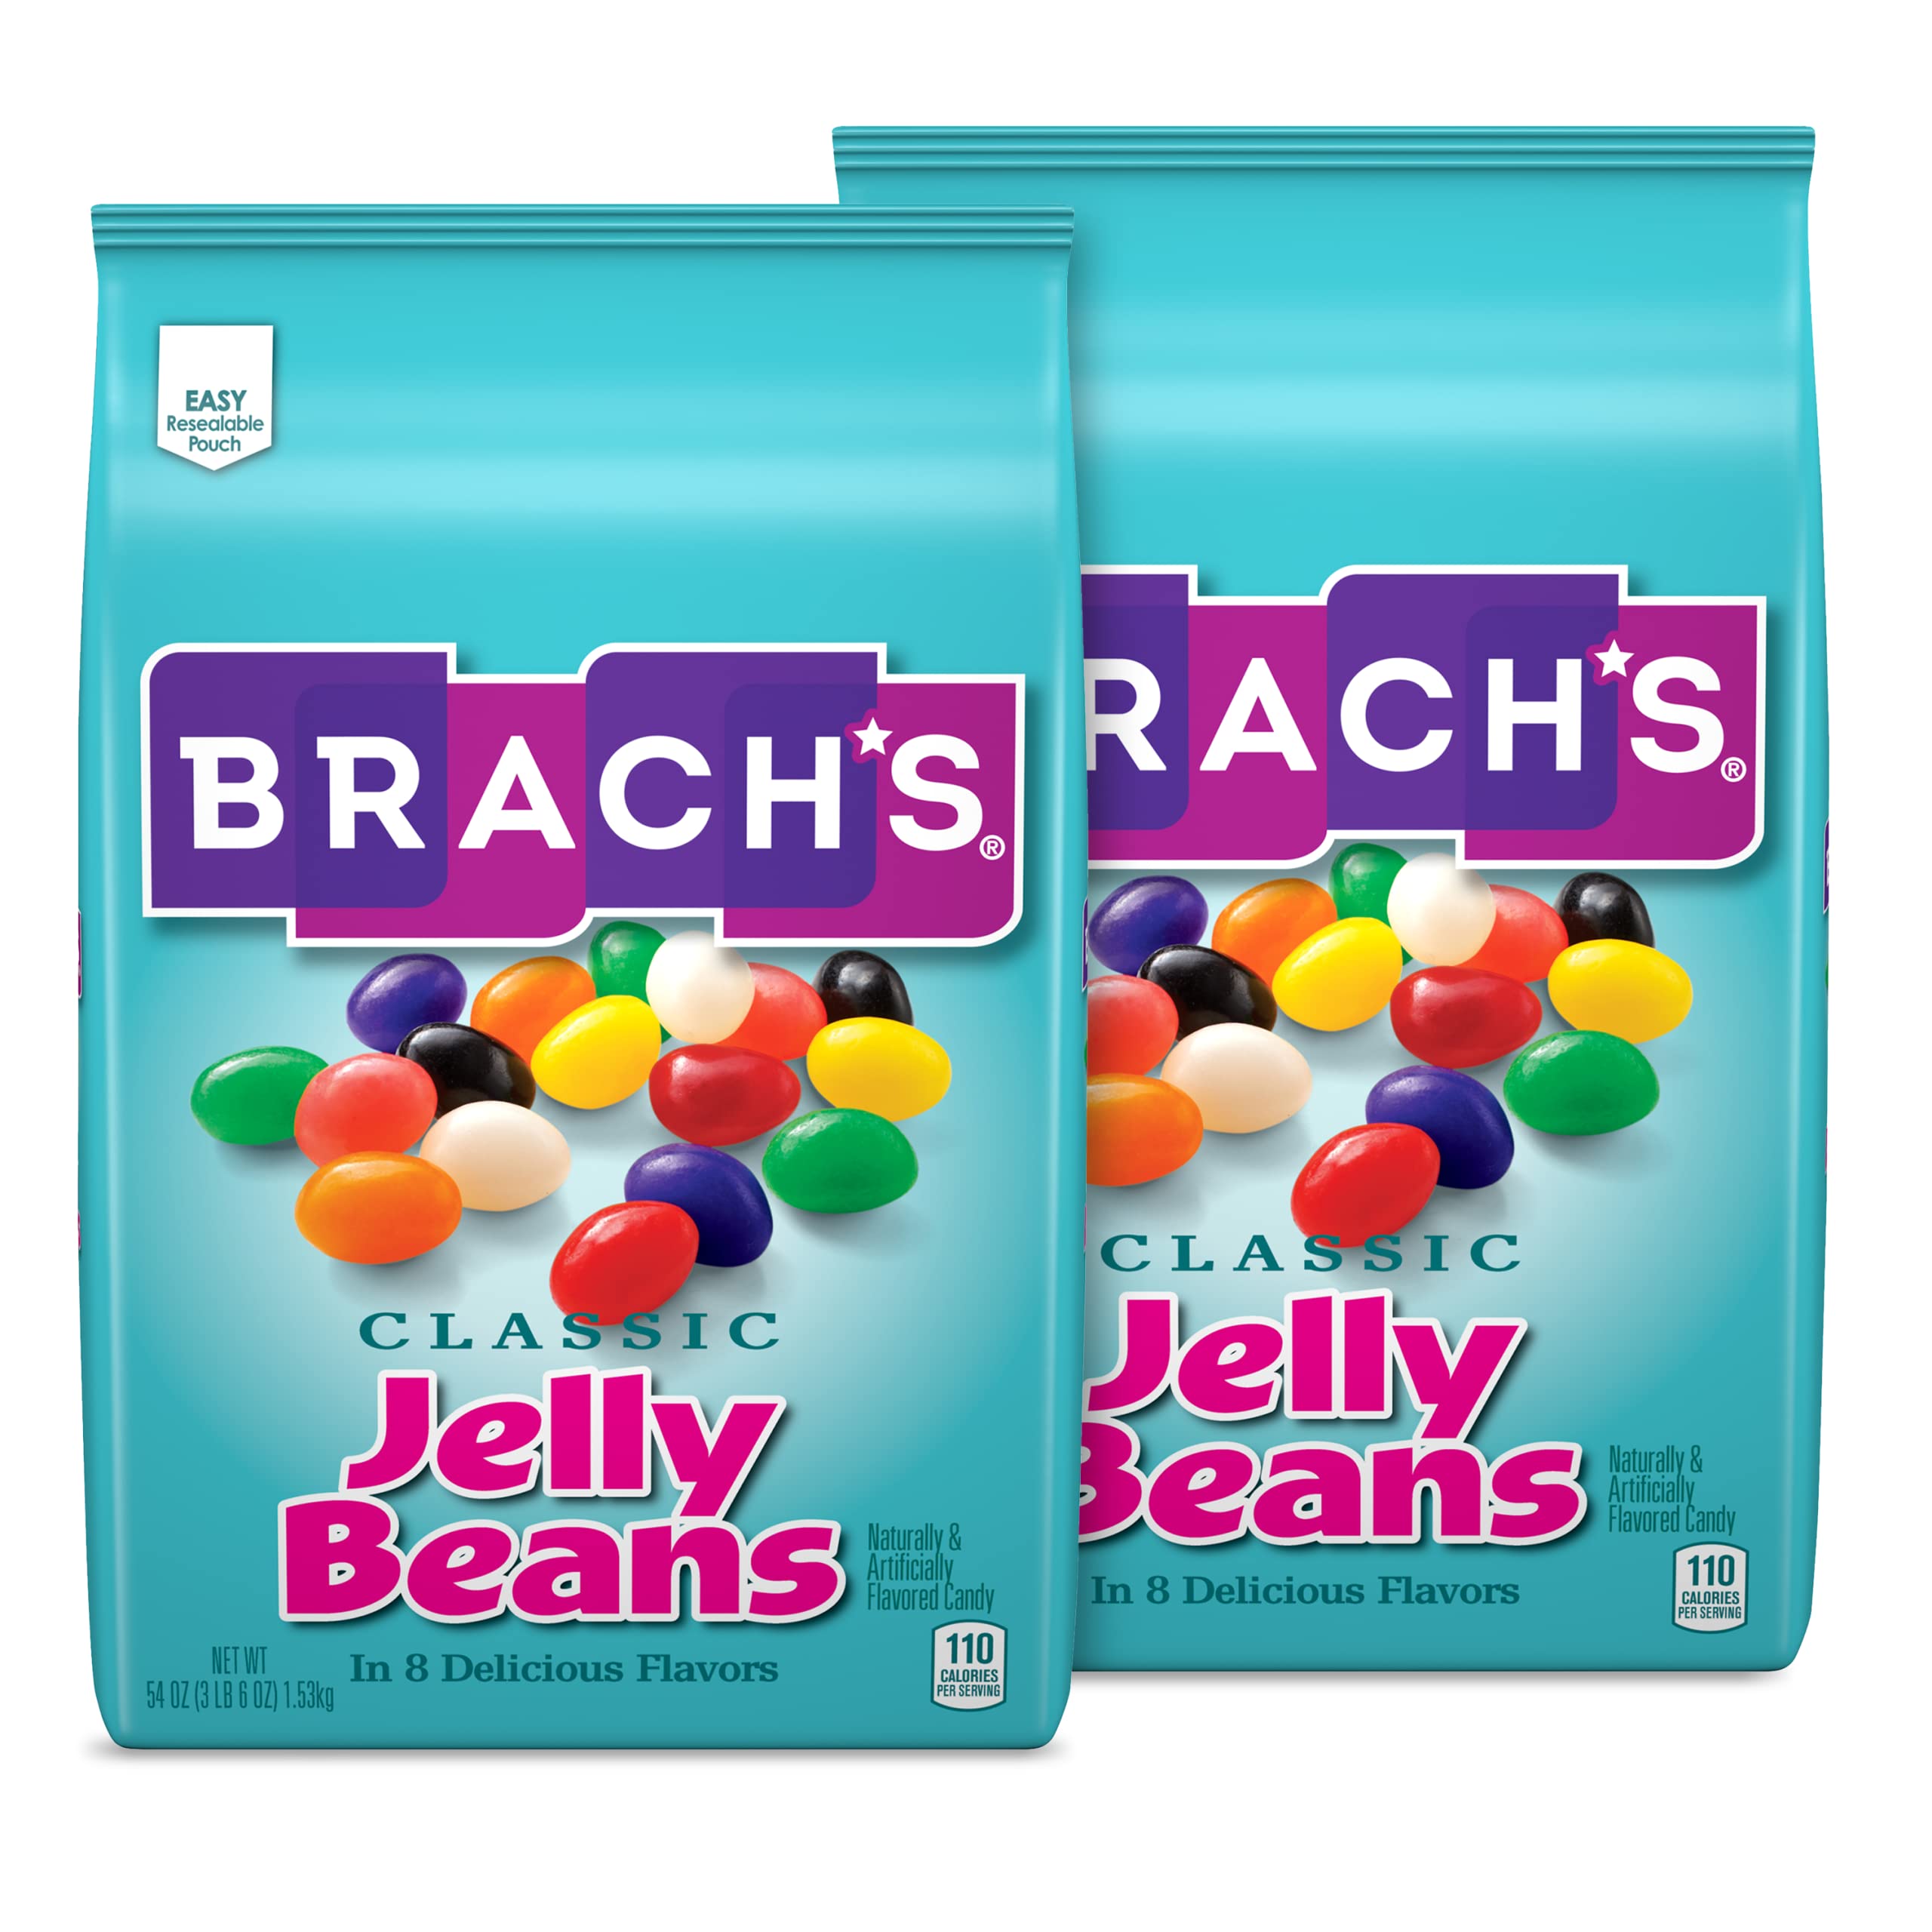 American Classics Mix 1 kilo bag - Jelly Belly UK